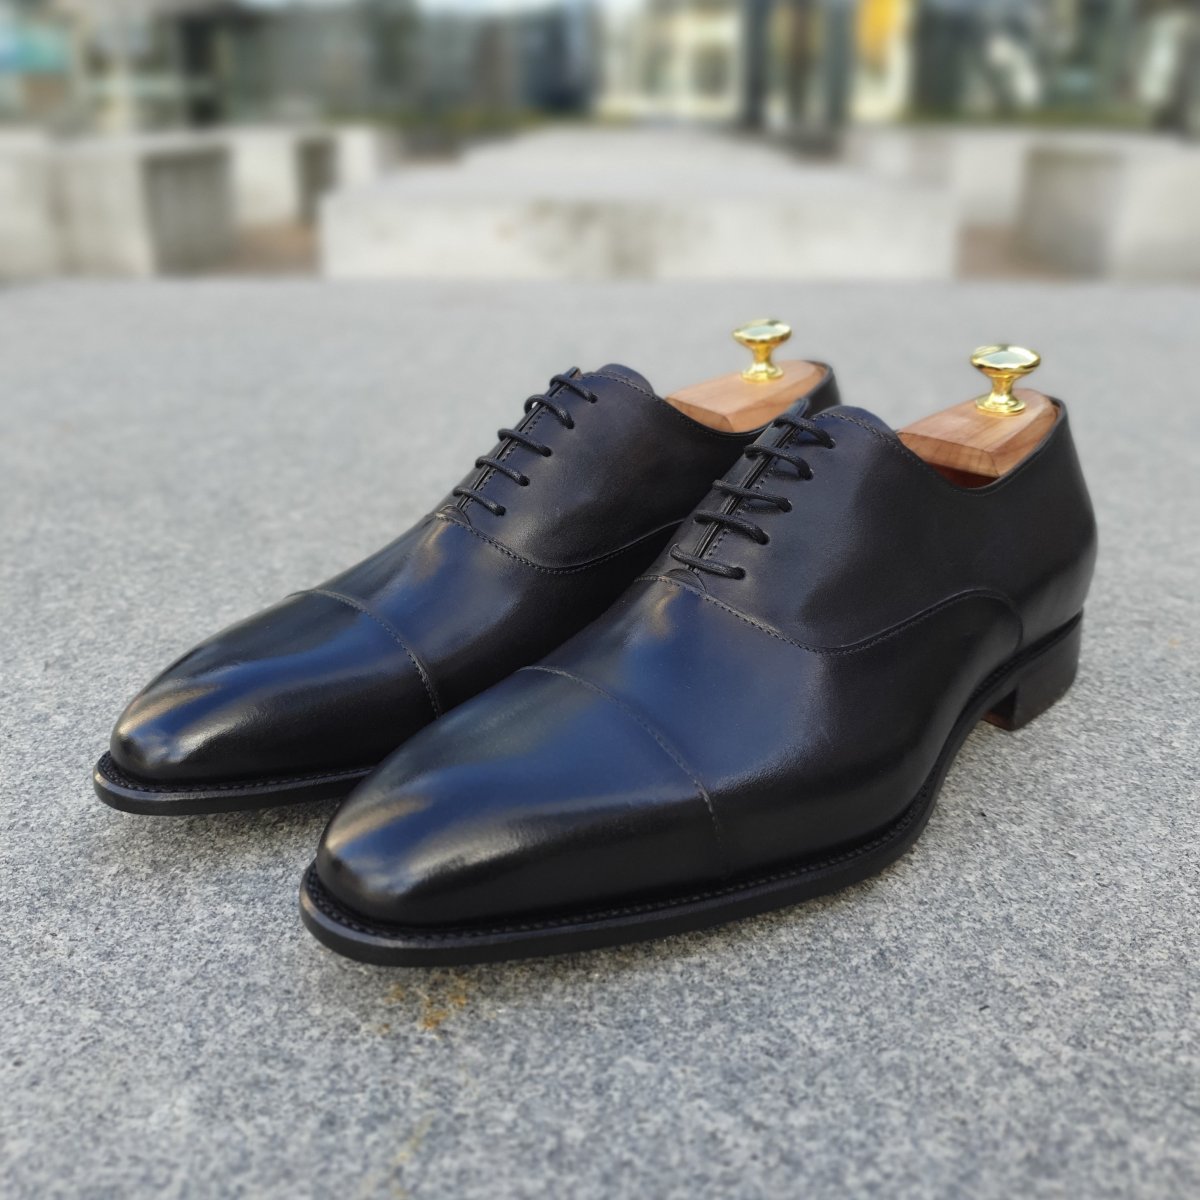 Black oxford shoes - top 3 shoes